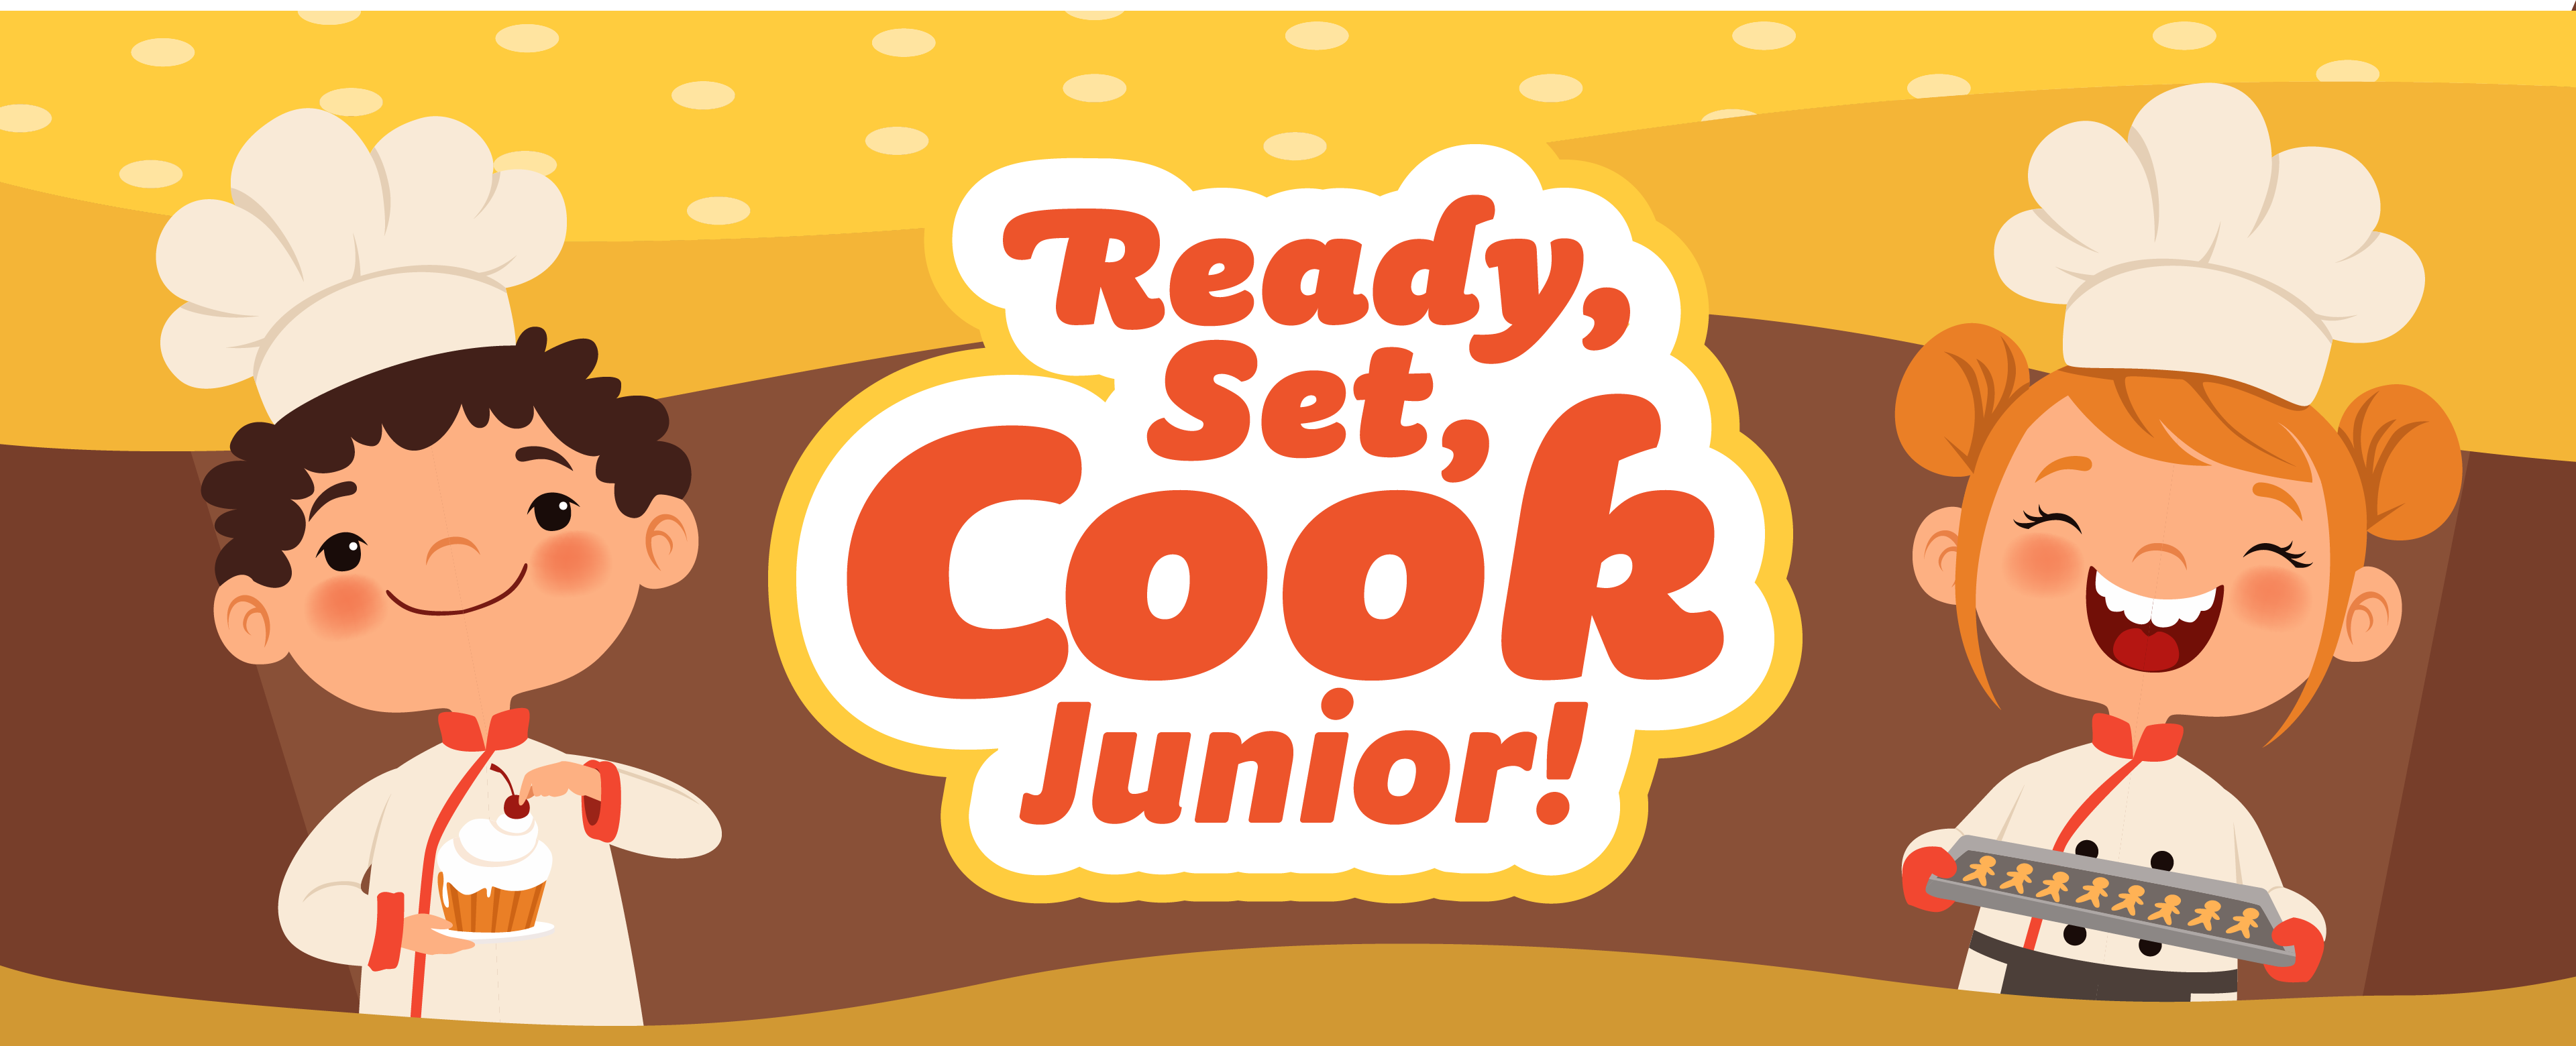 Ready, Set, Cook Junior!